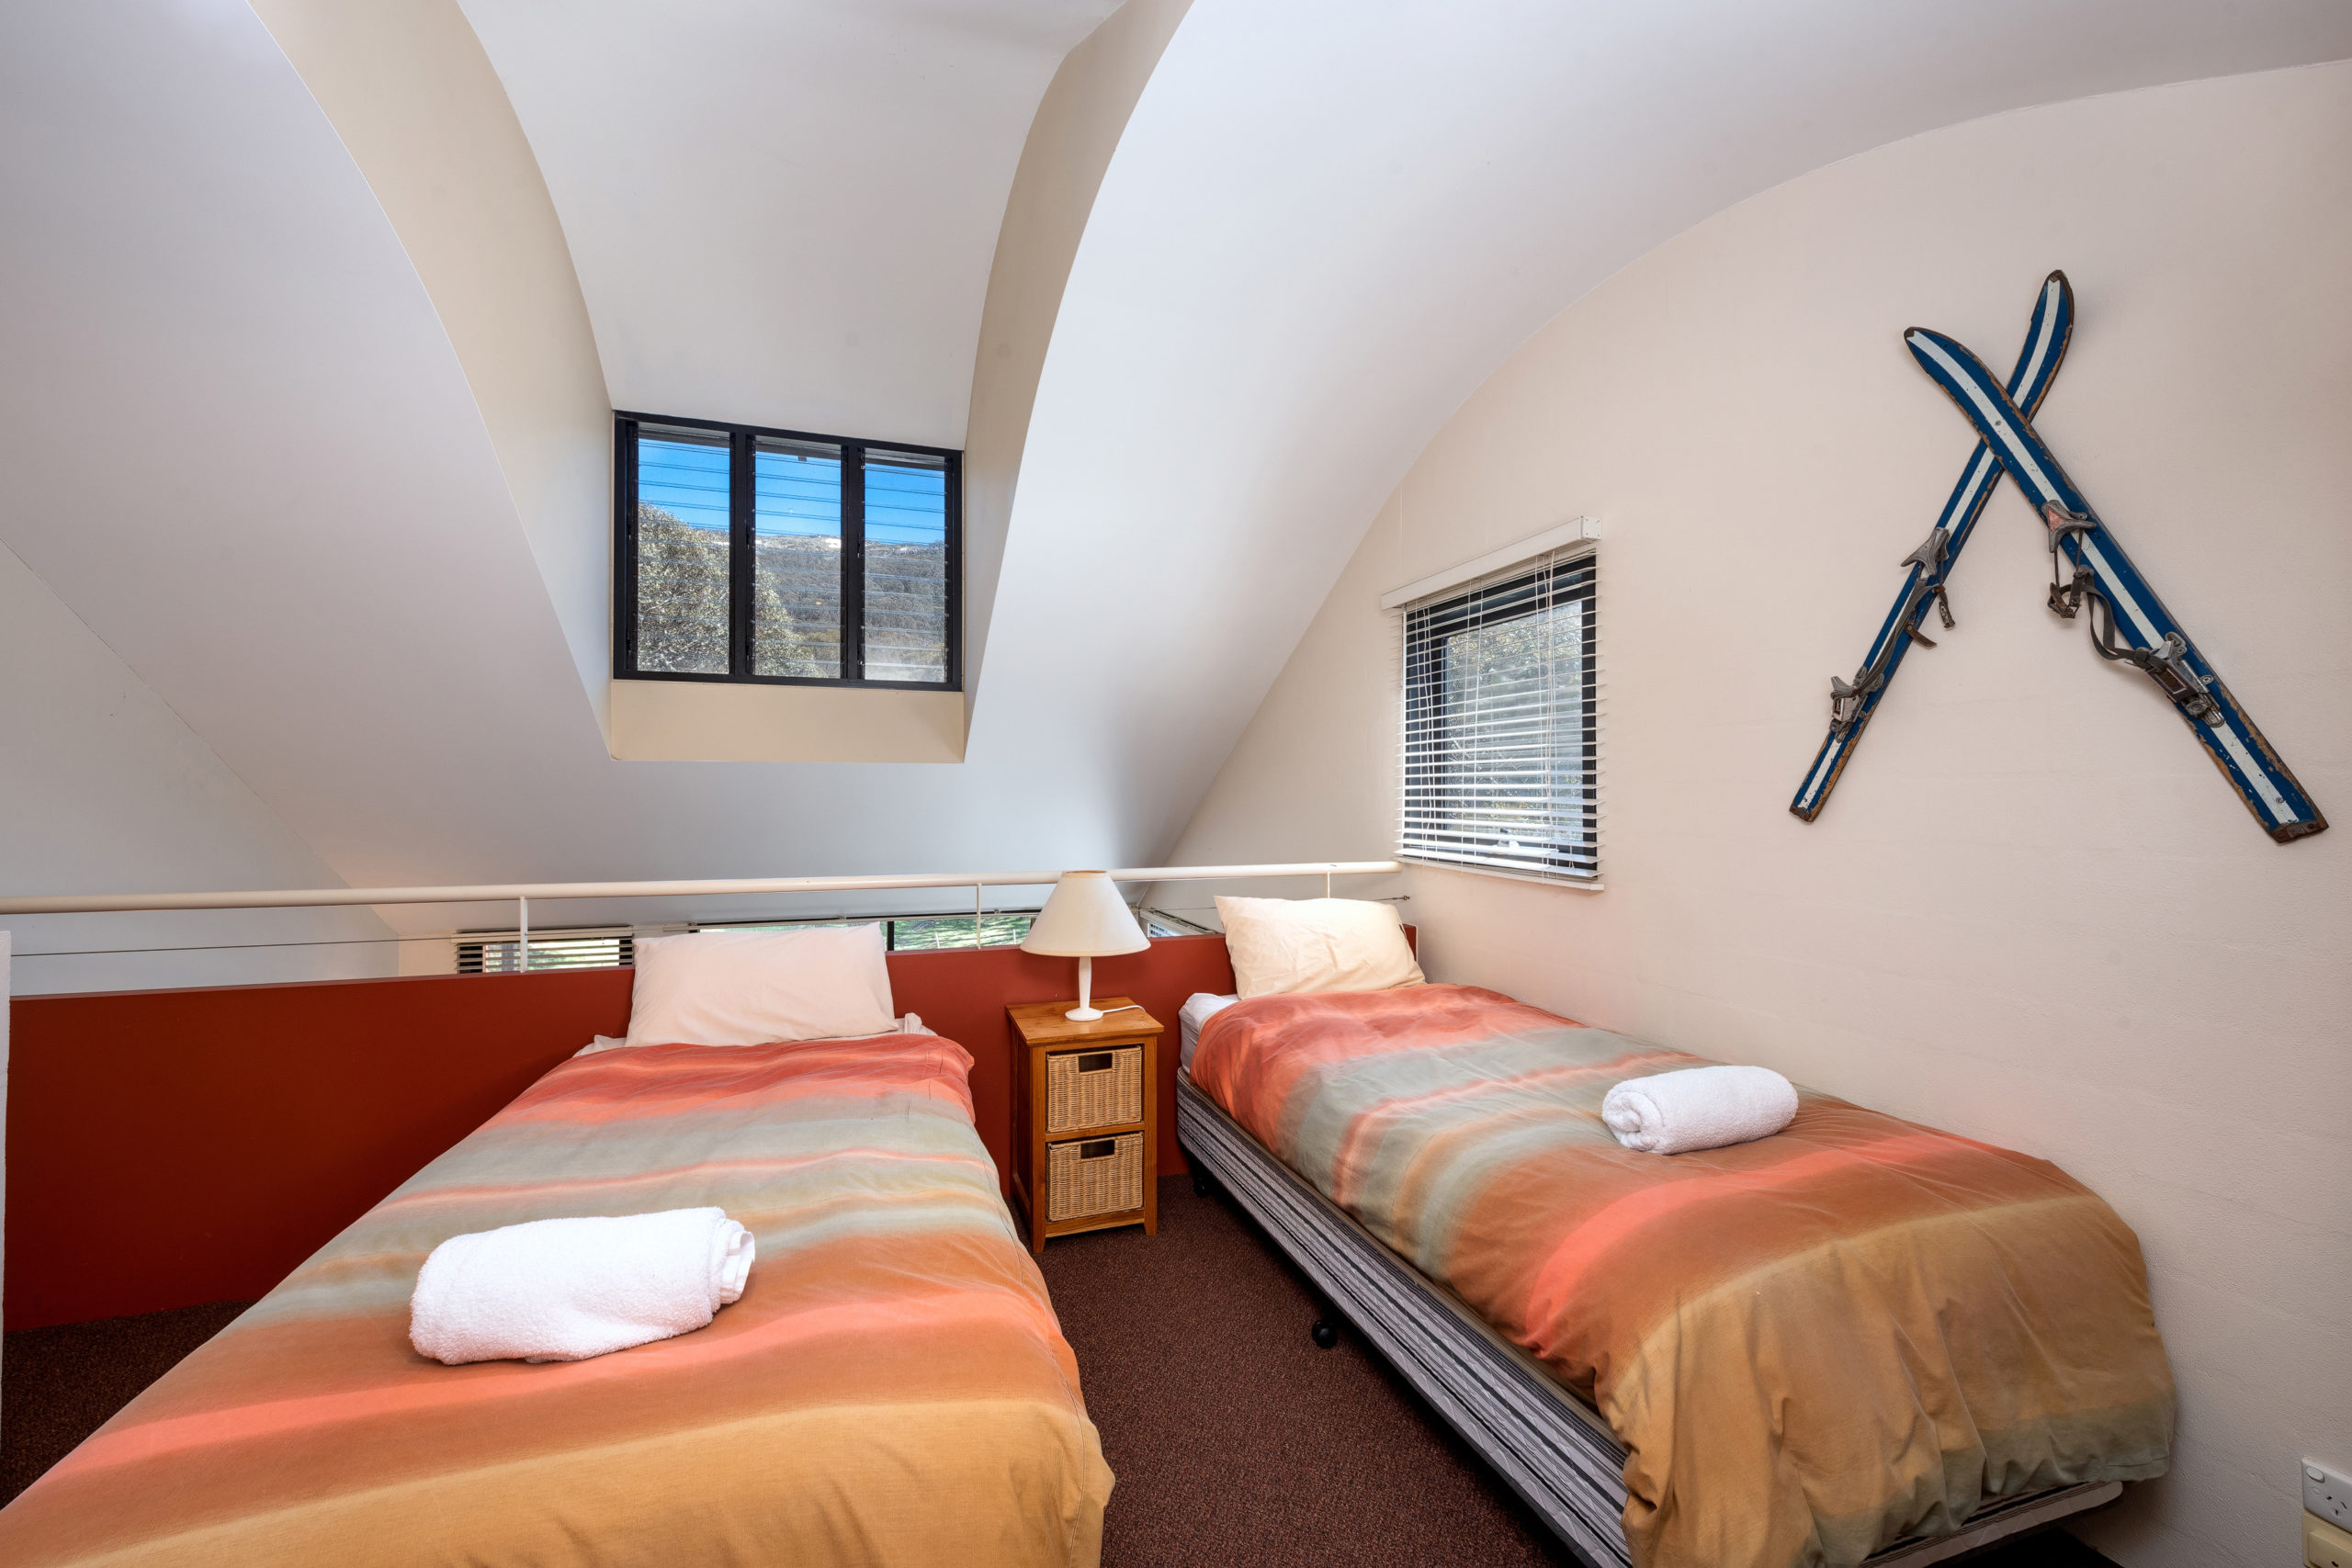 Jack Frost, Woodridge – One Bedroom + Loft Apartment – Guide: $829k